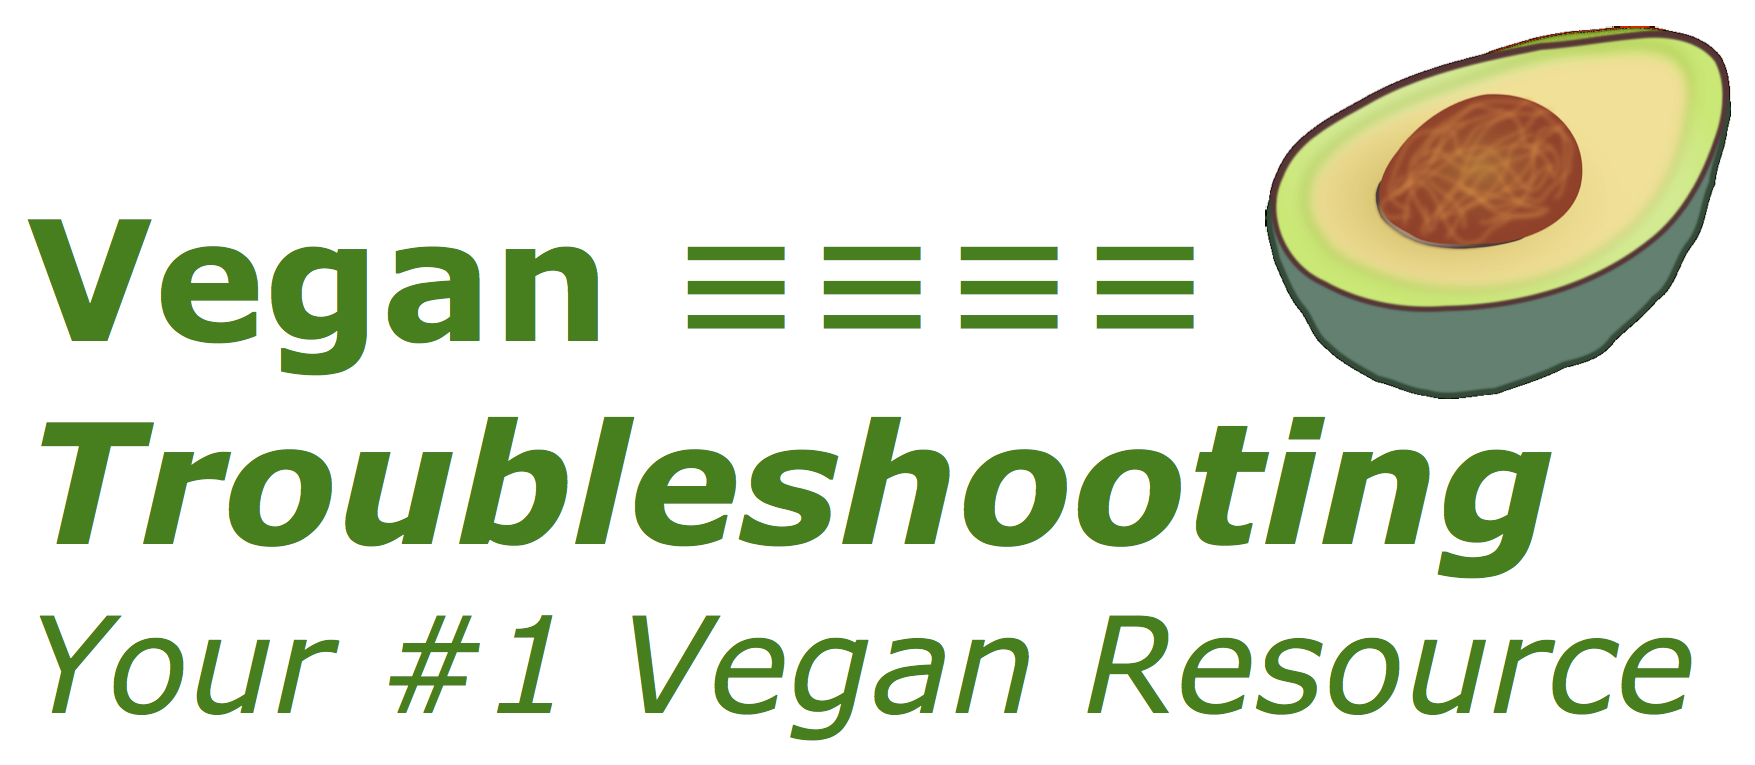 Vegan Troubleshooting | Your #1 Vegan Resource